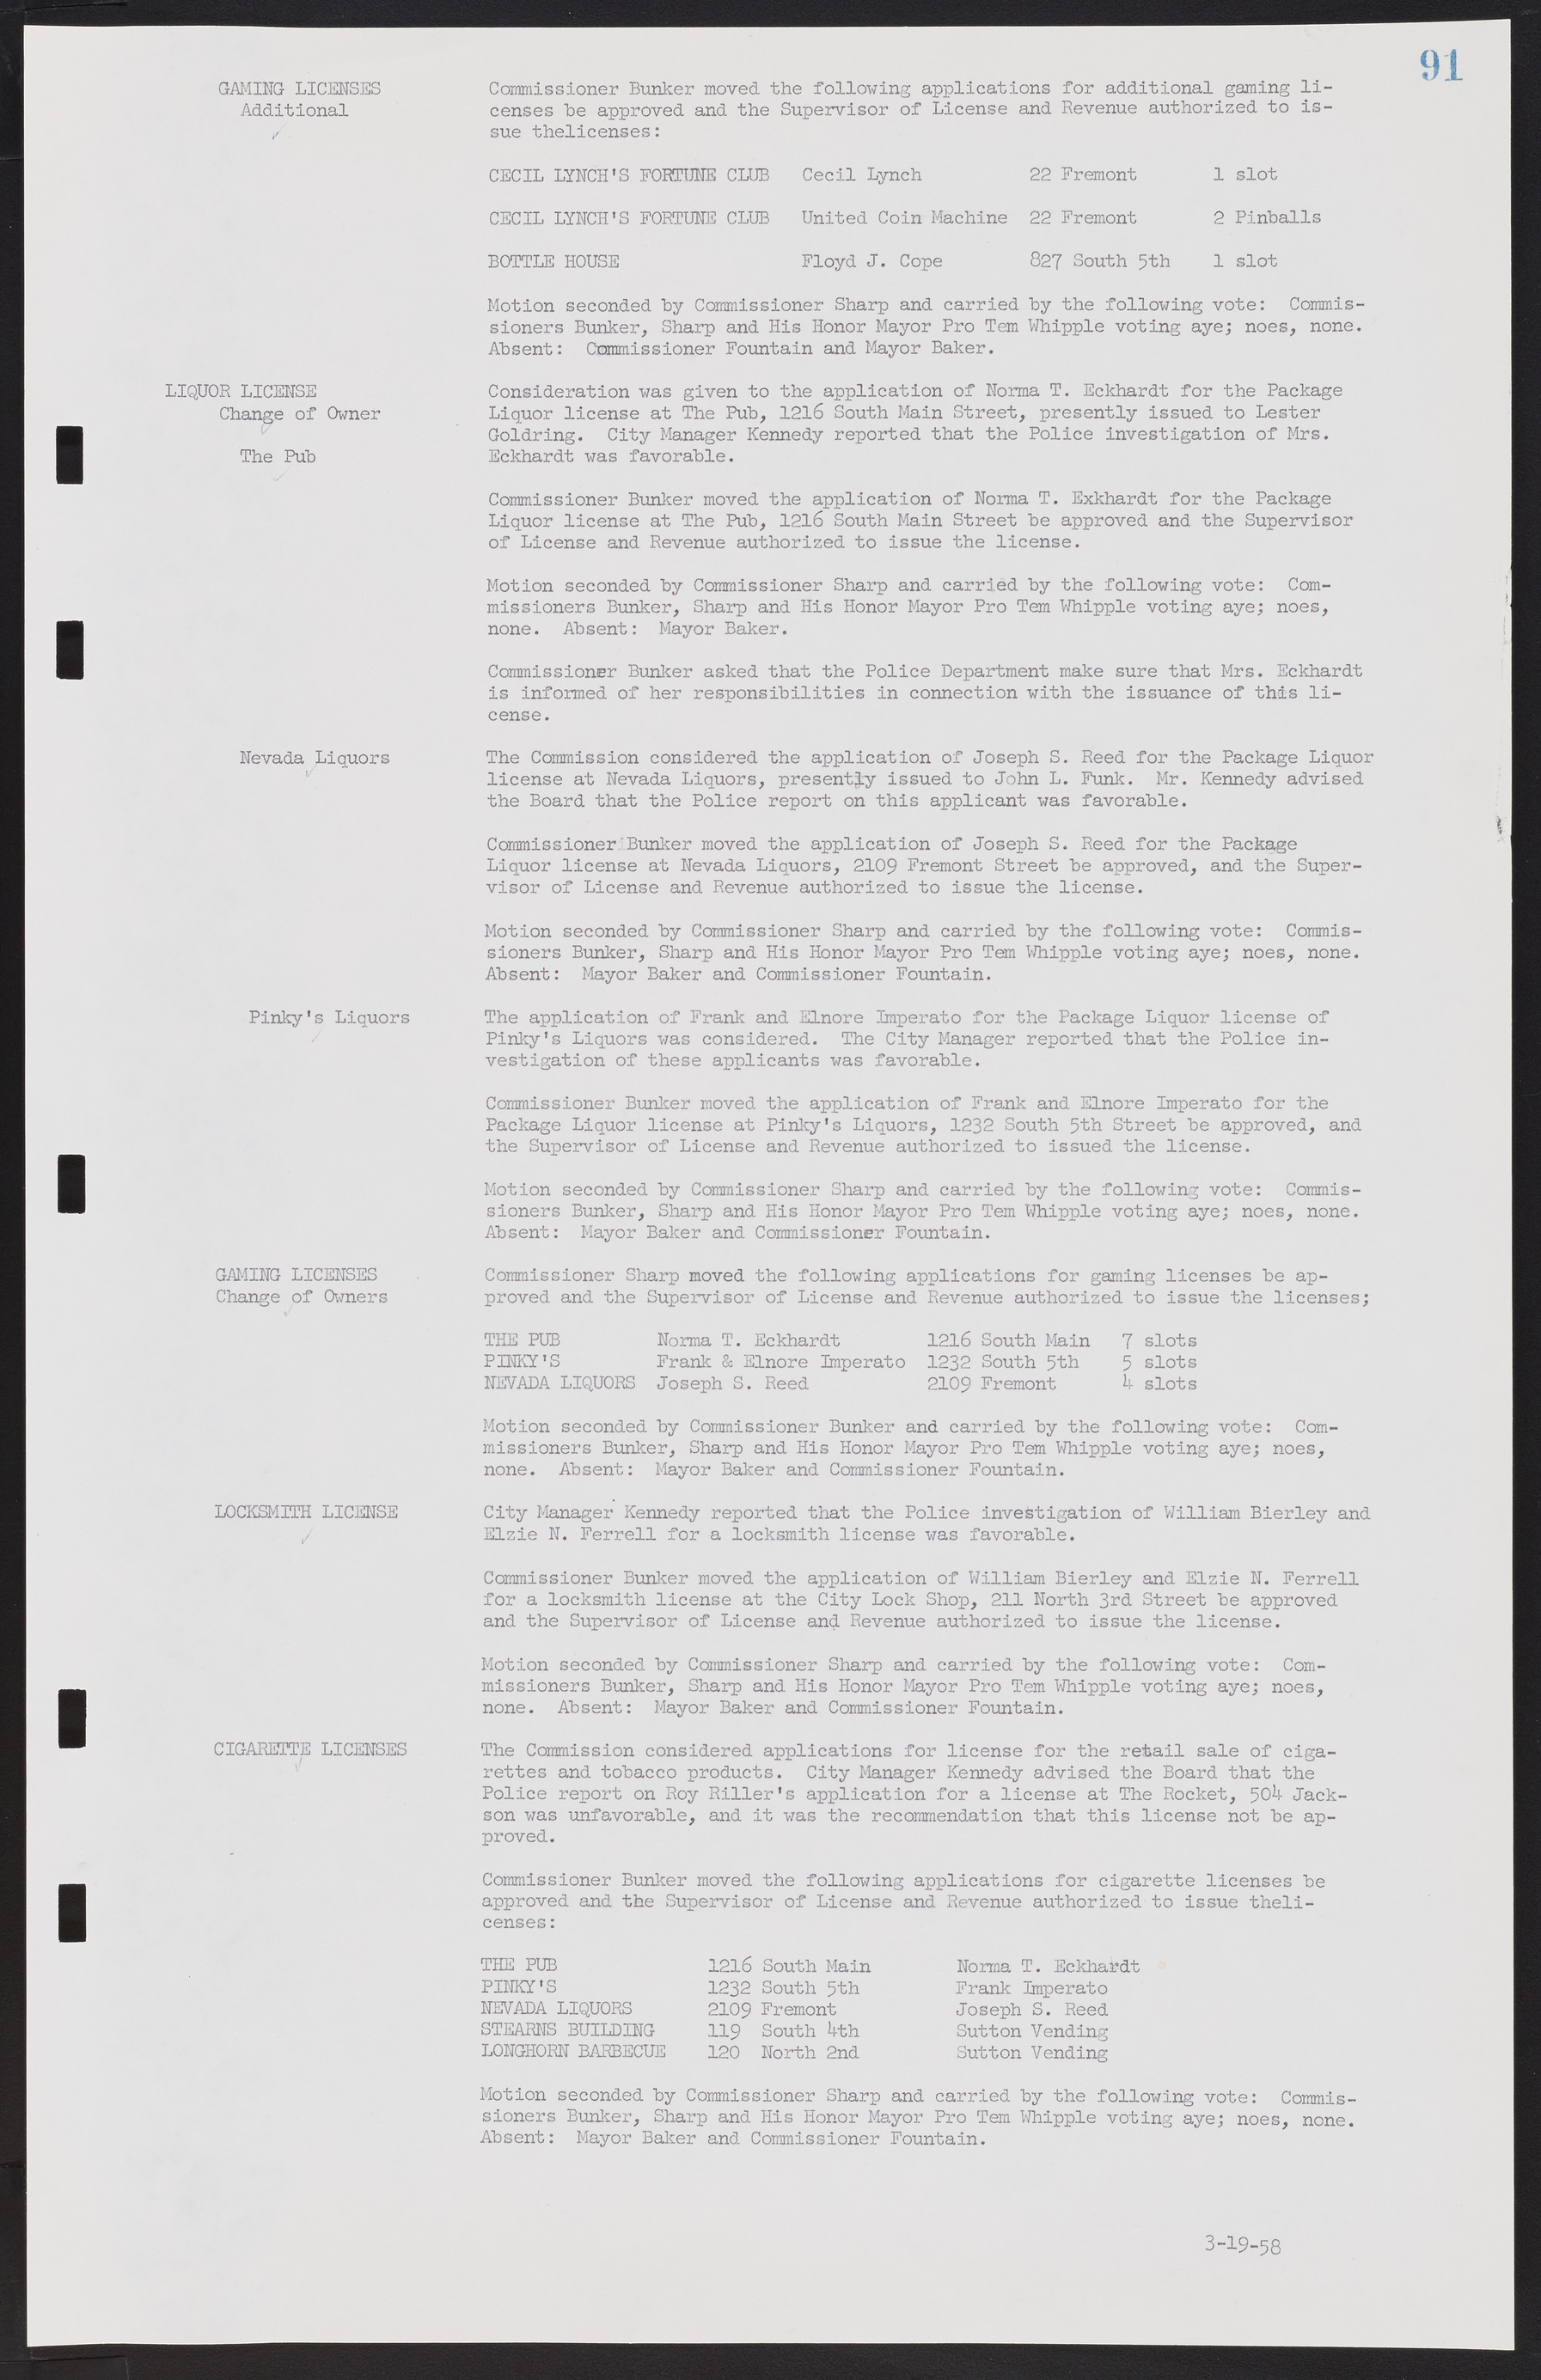 Las Vegas City Commission Minutes, November 20, 1957 to December 2, 1959, lvc000011-95